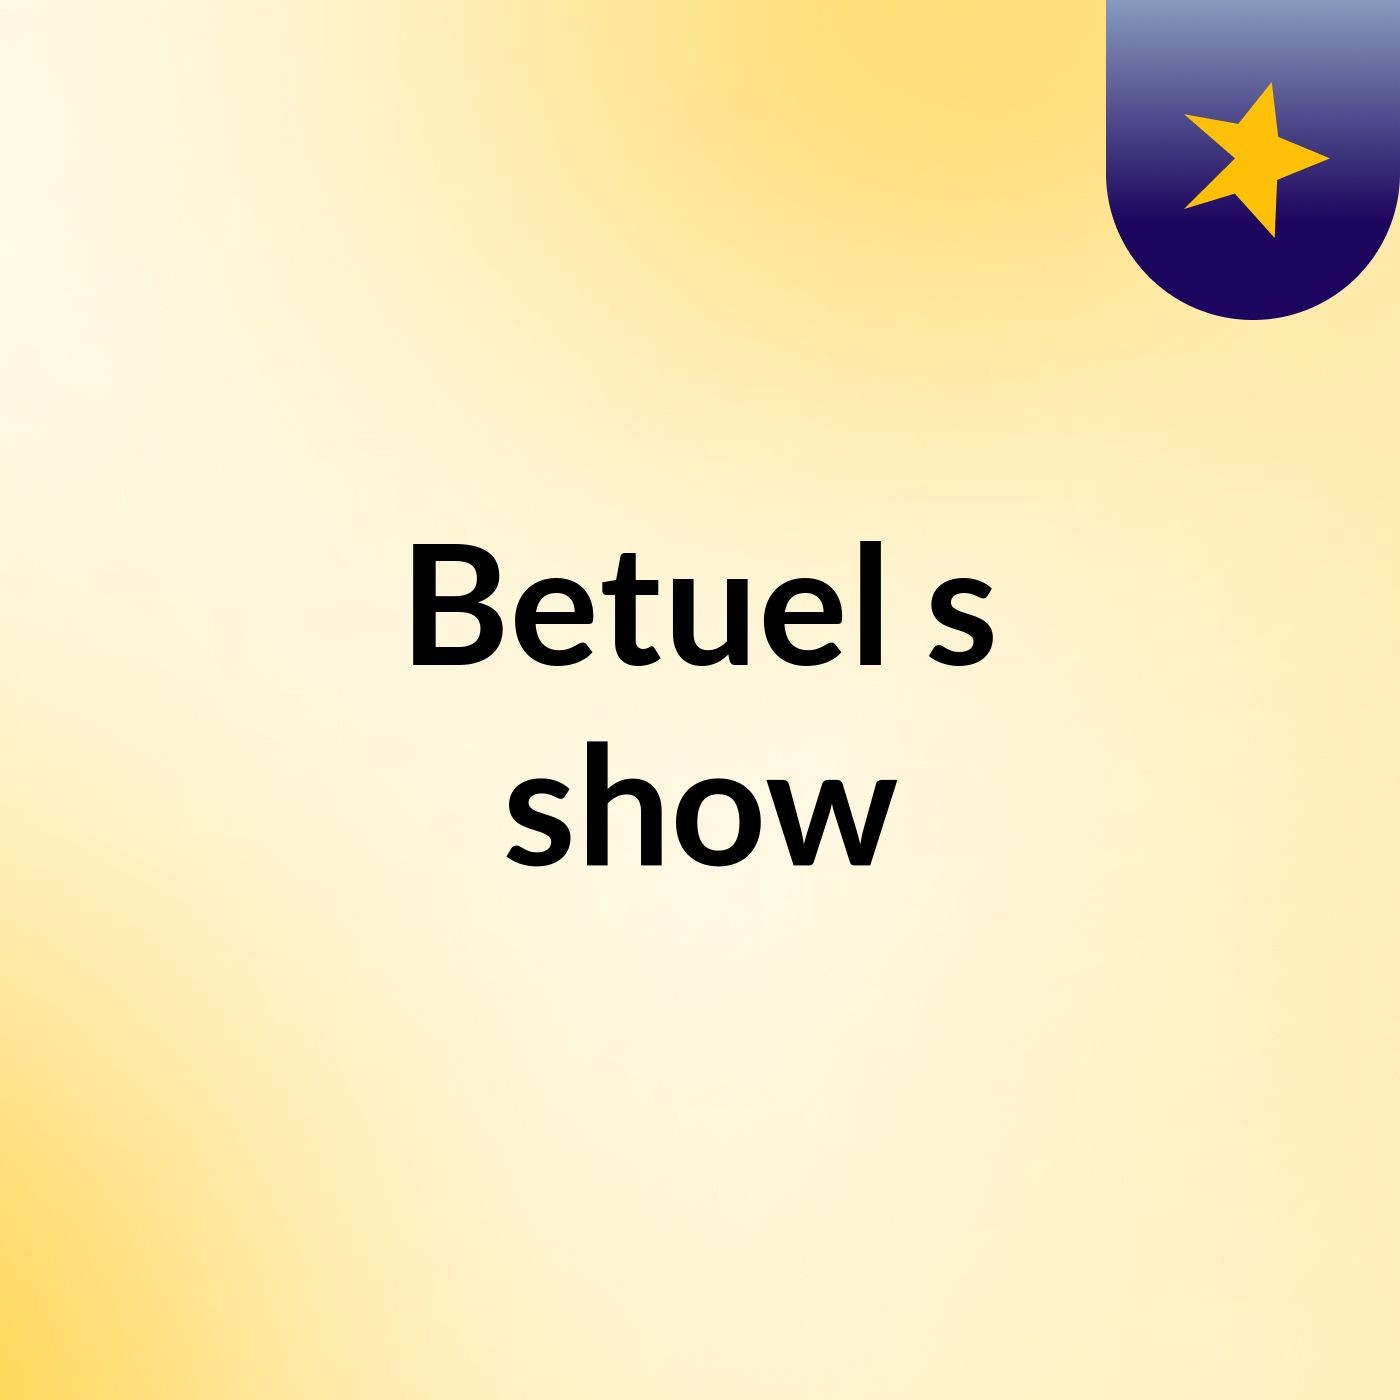 Betuel's show